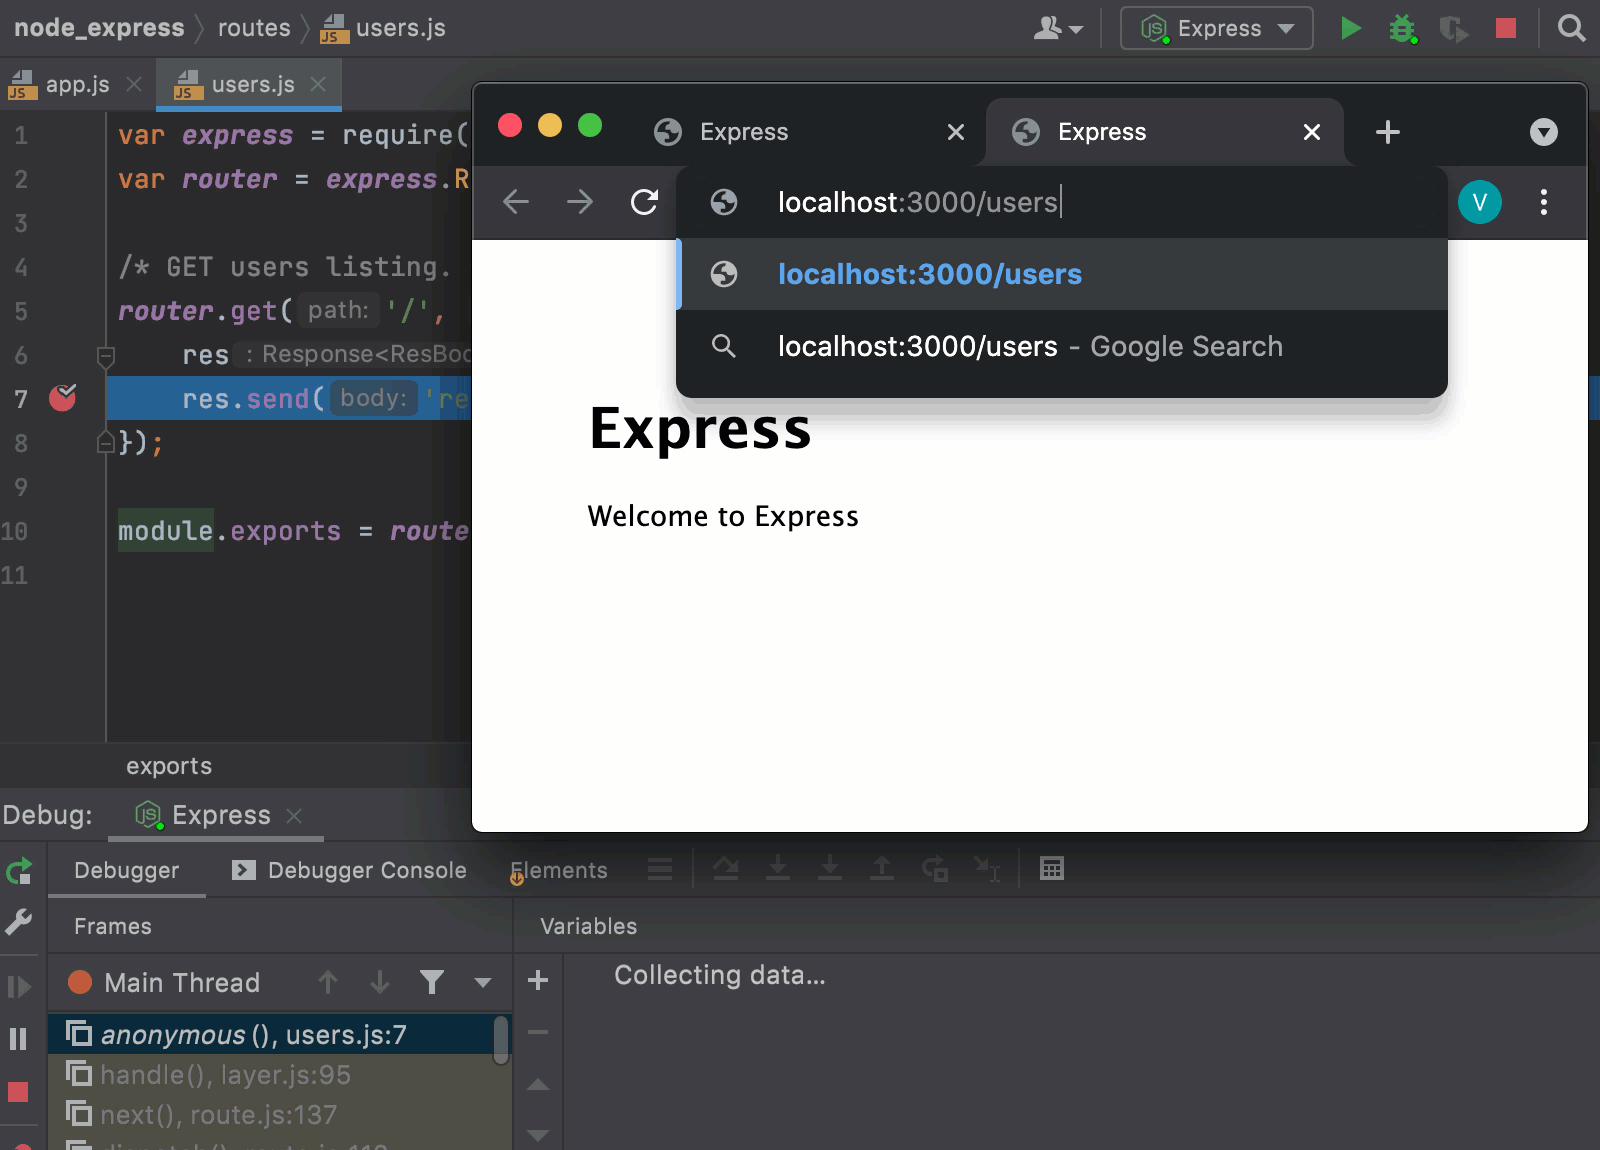 Start and debug a Node.js Express app